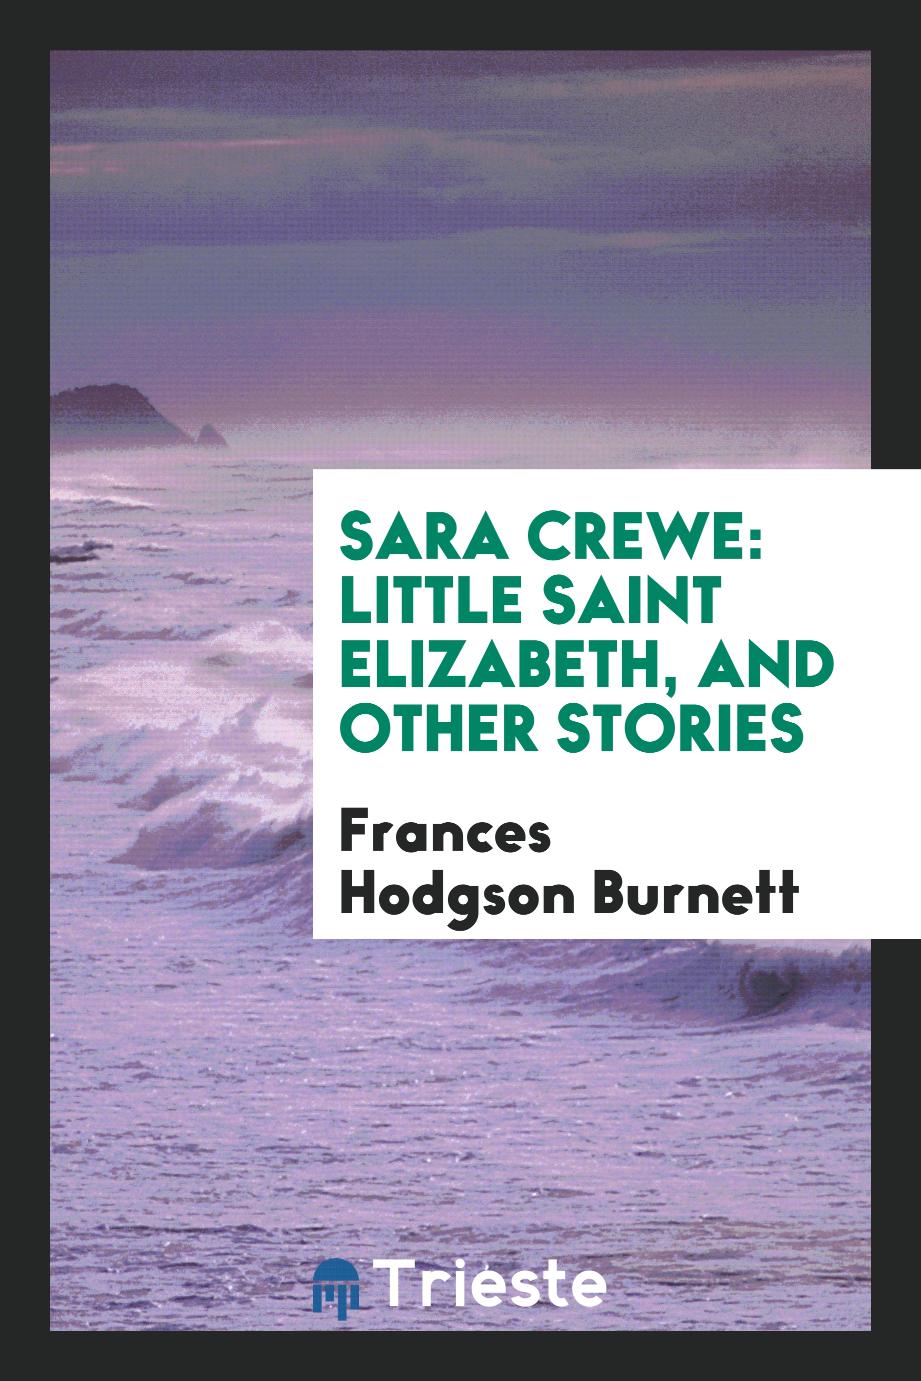 Sara Crewe: Little Saint Elizabeth, and other stories